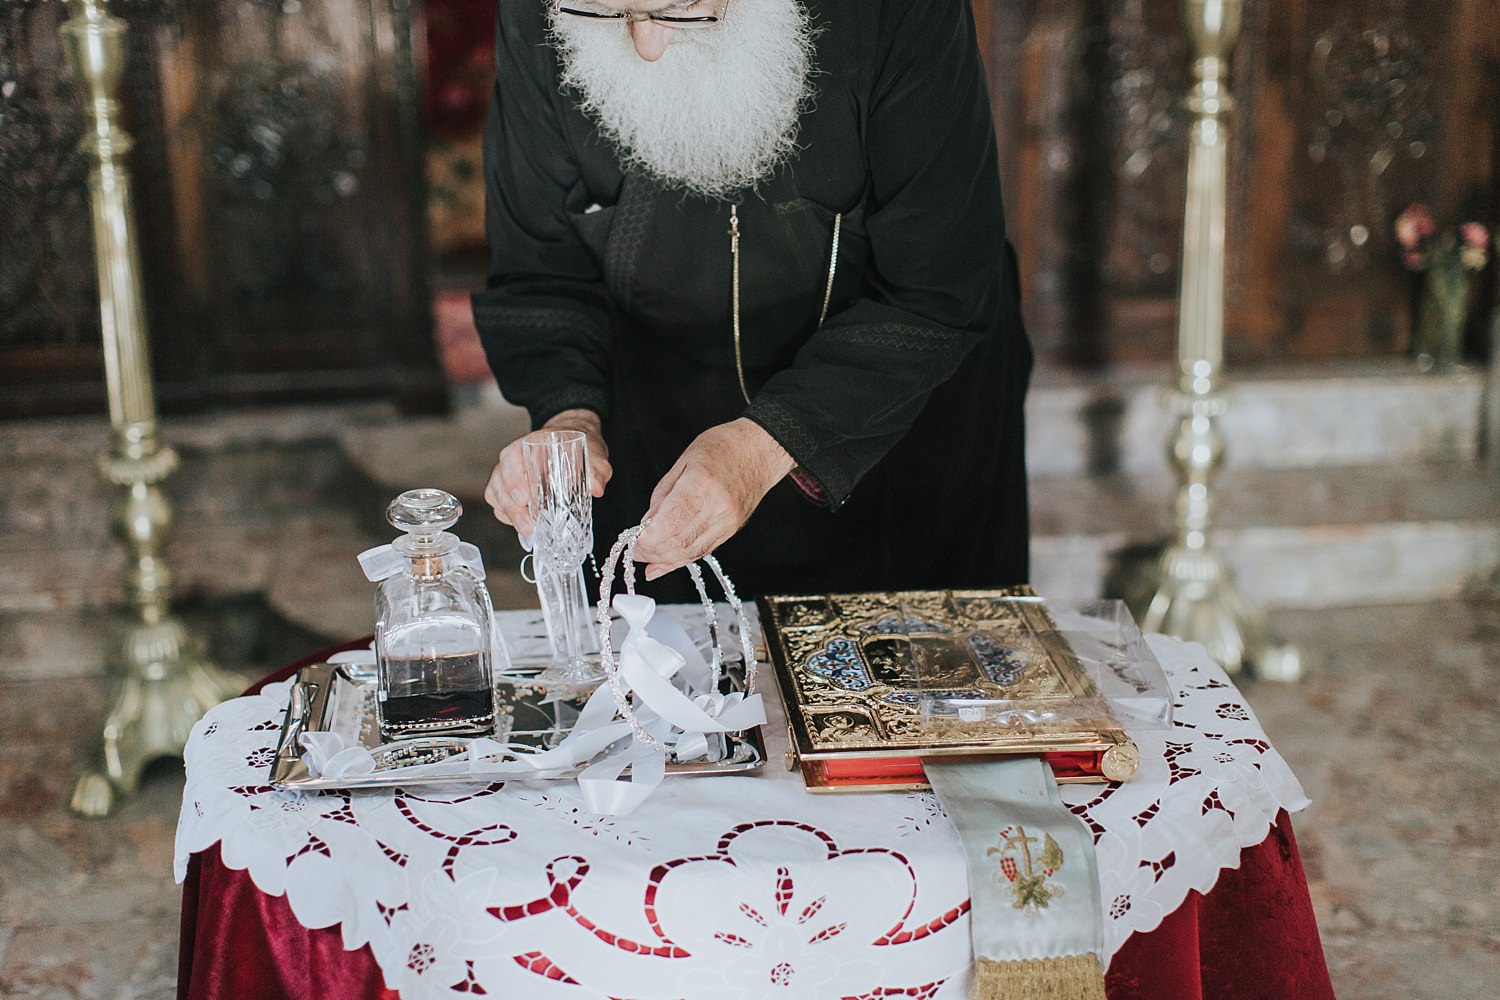 orthodox priest prepares the wedding sacrament